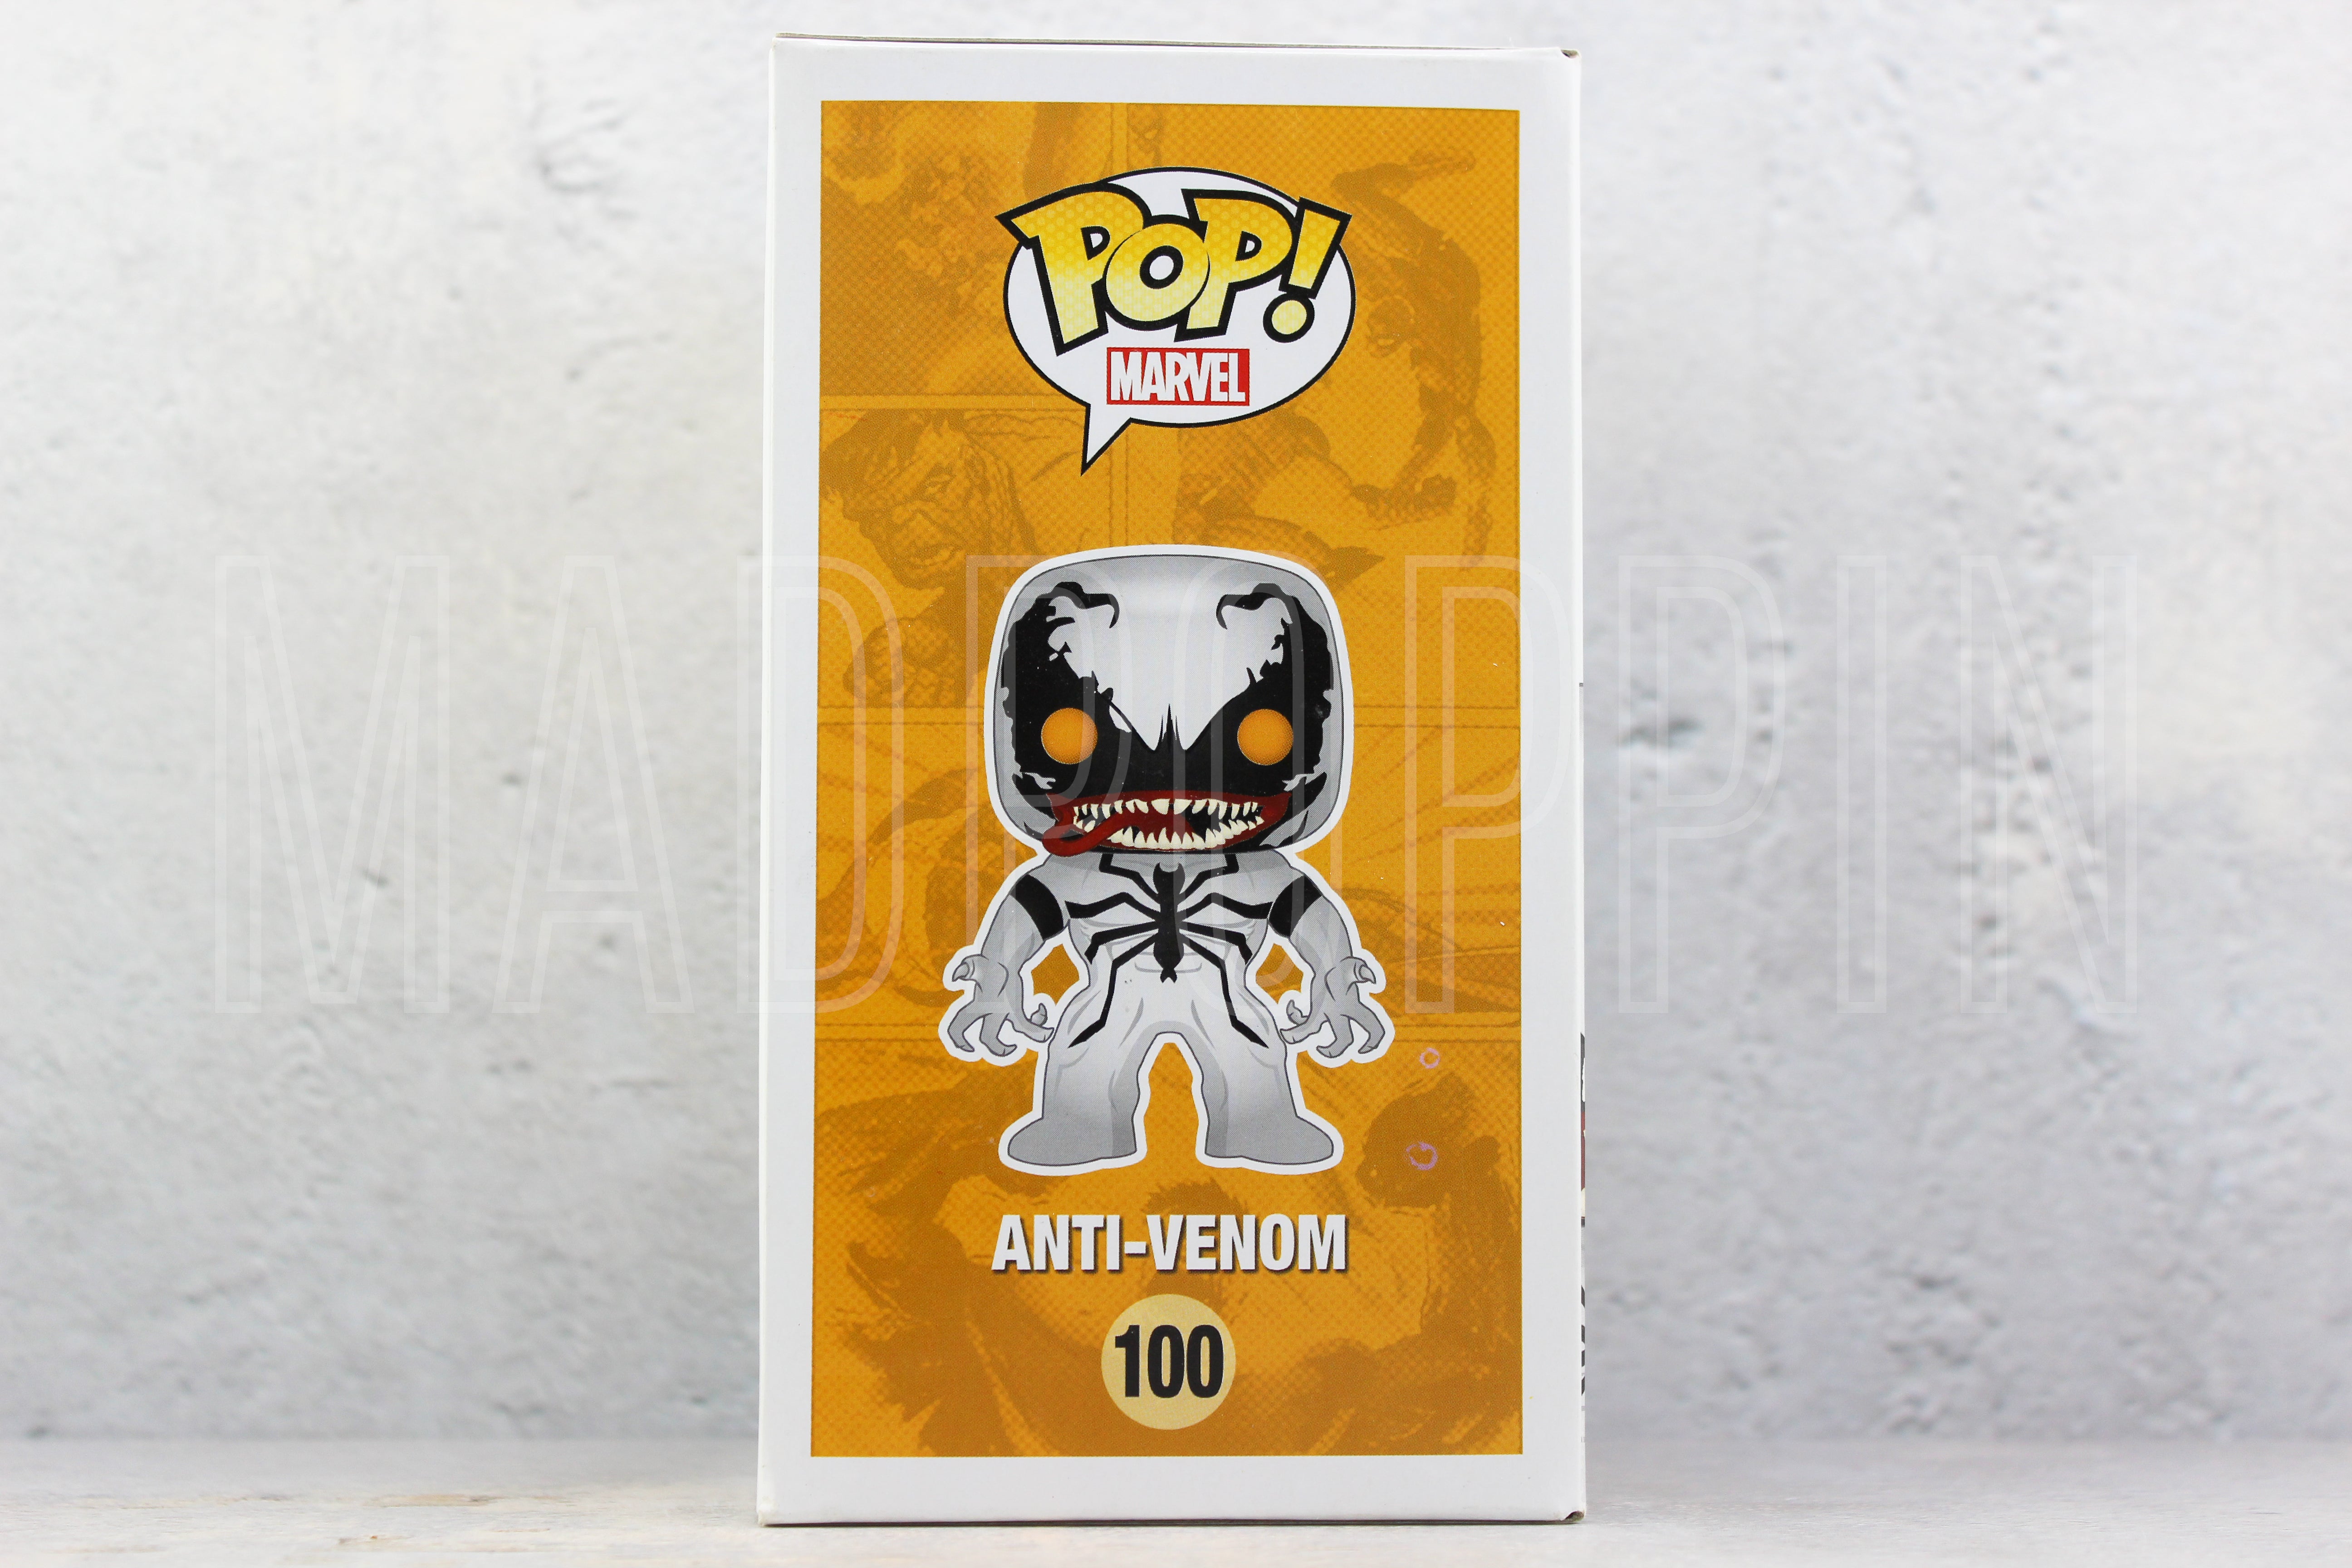 POP! Marvel: Marvel - Anti-Venom